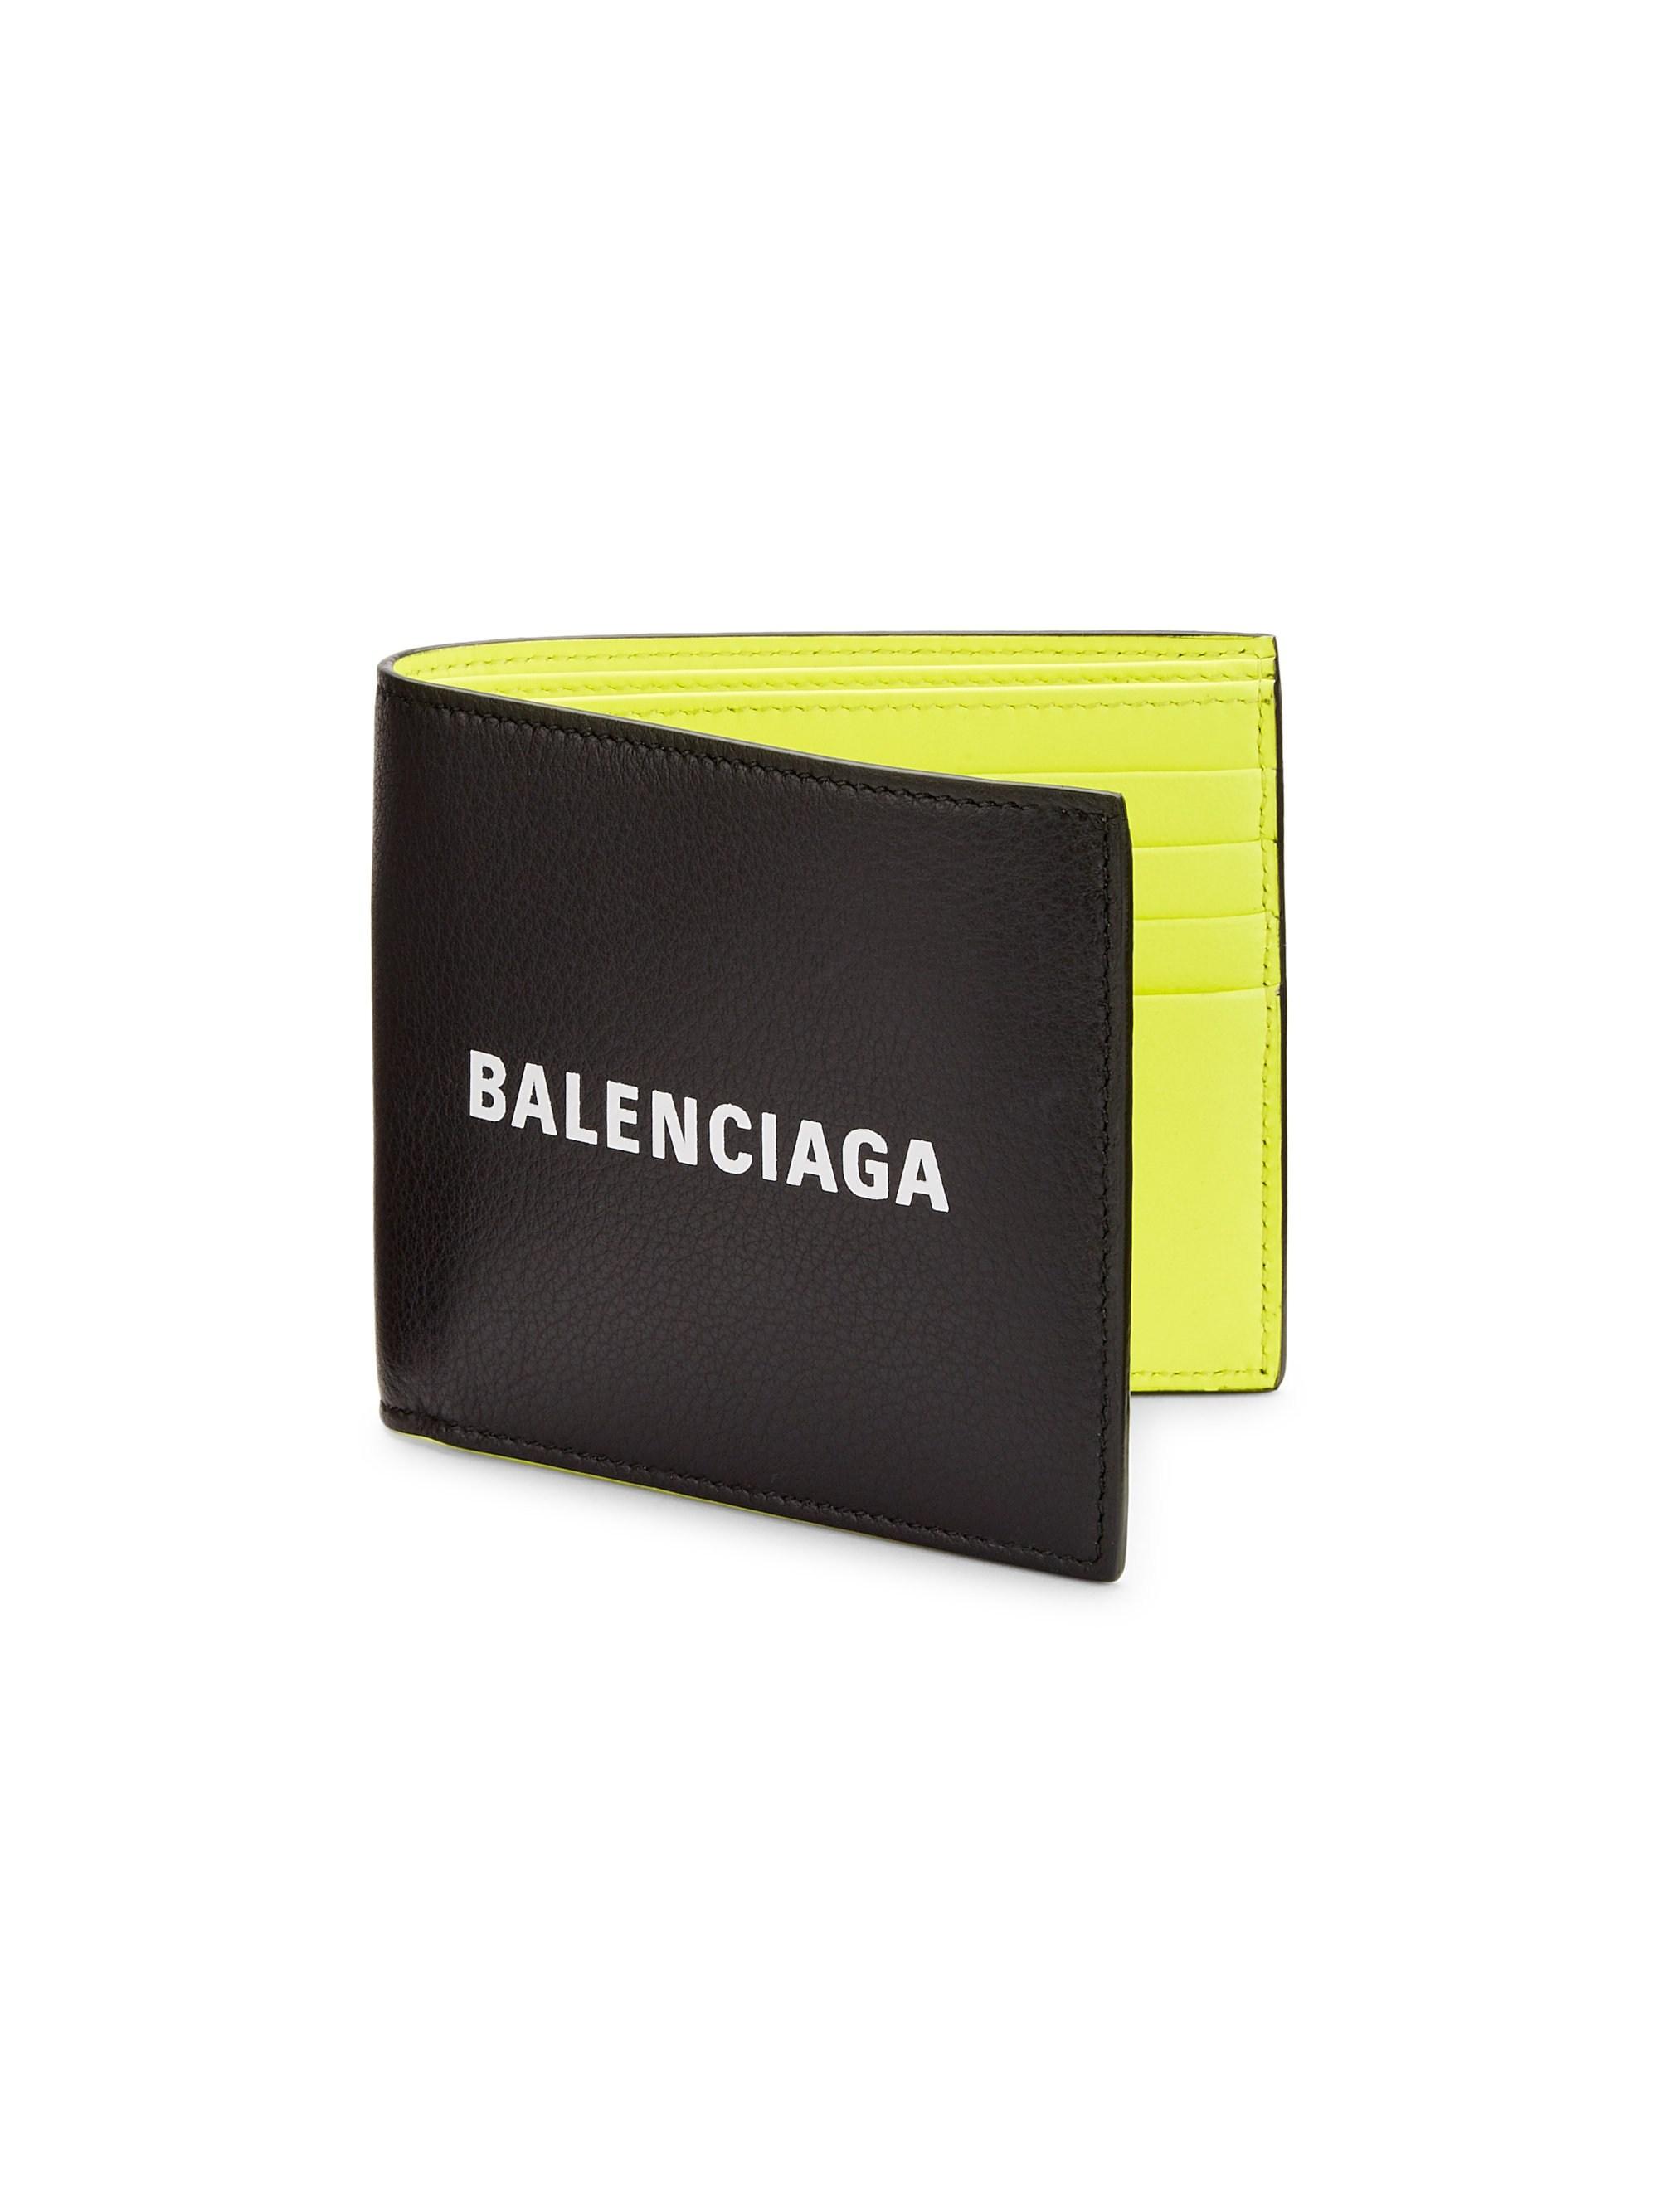 Balenciaga Logo Leather Bifold Wallet in Black White Yellow (Yellow) for Men  - Lyst